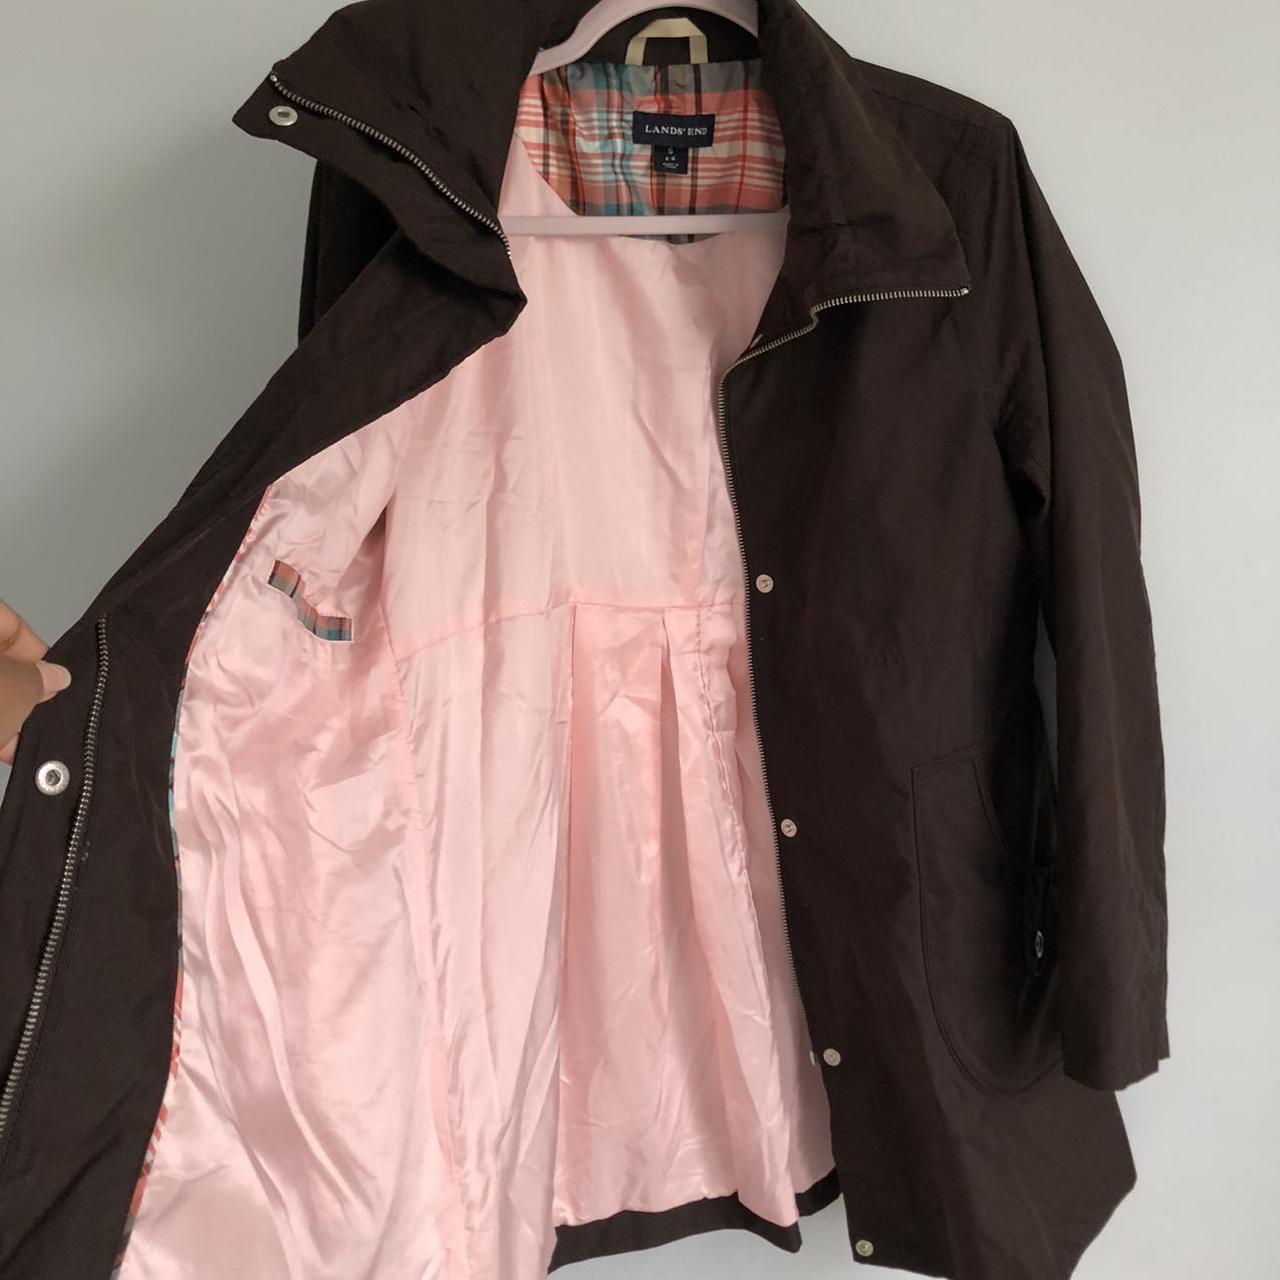 Product Image 2 - Lands end brown jacket. Size